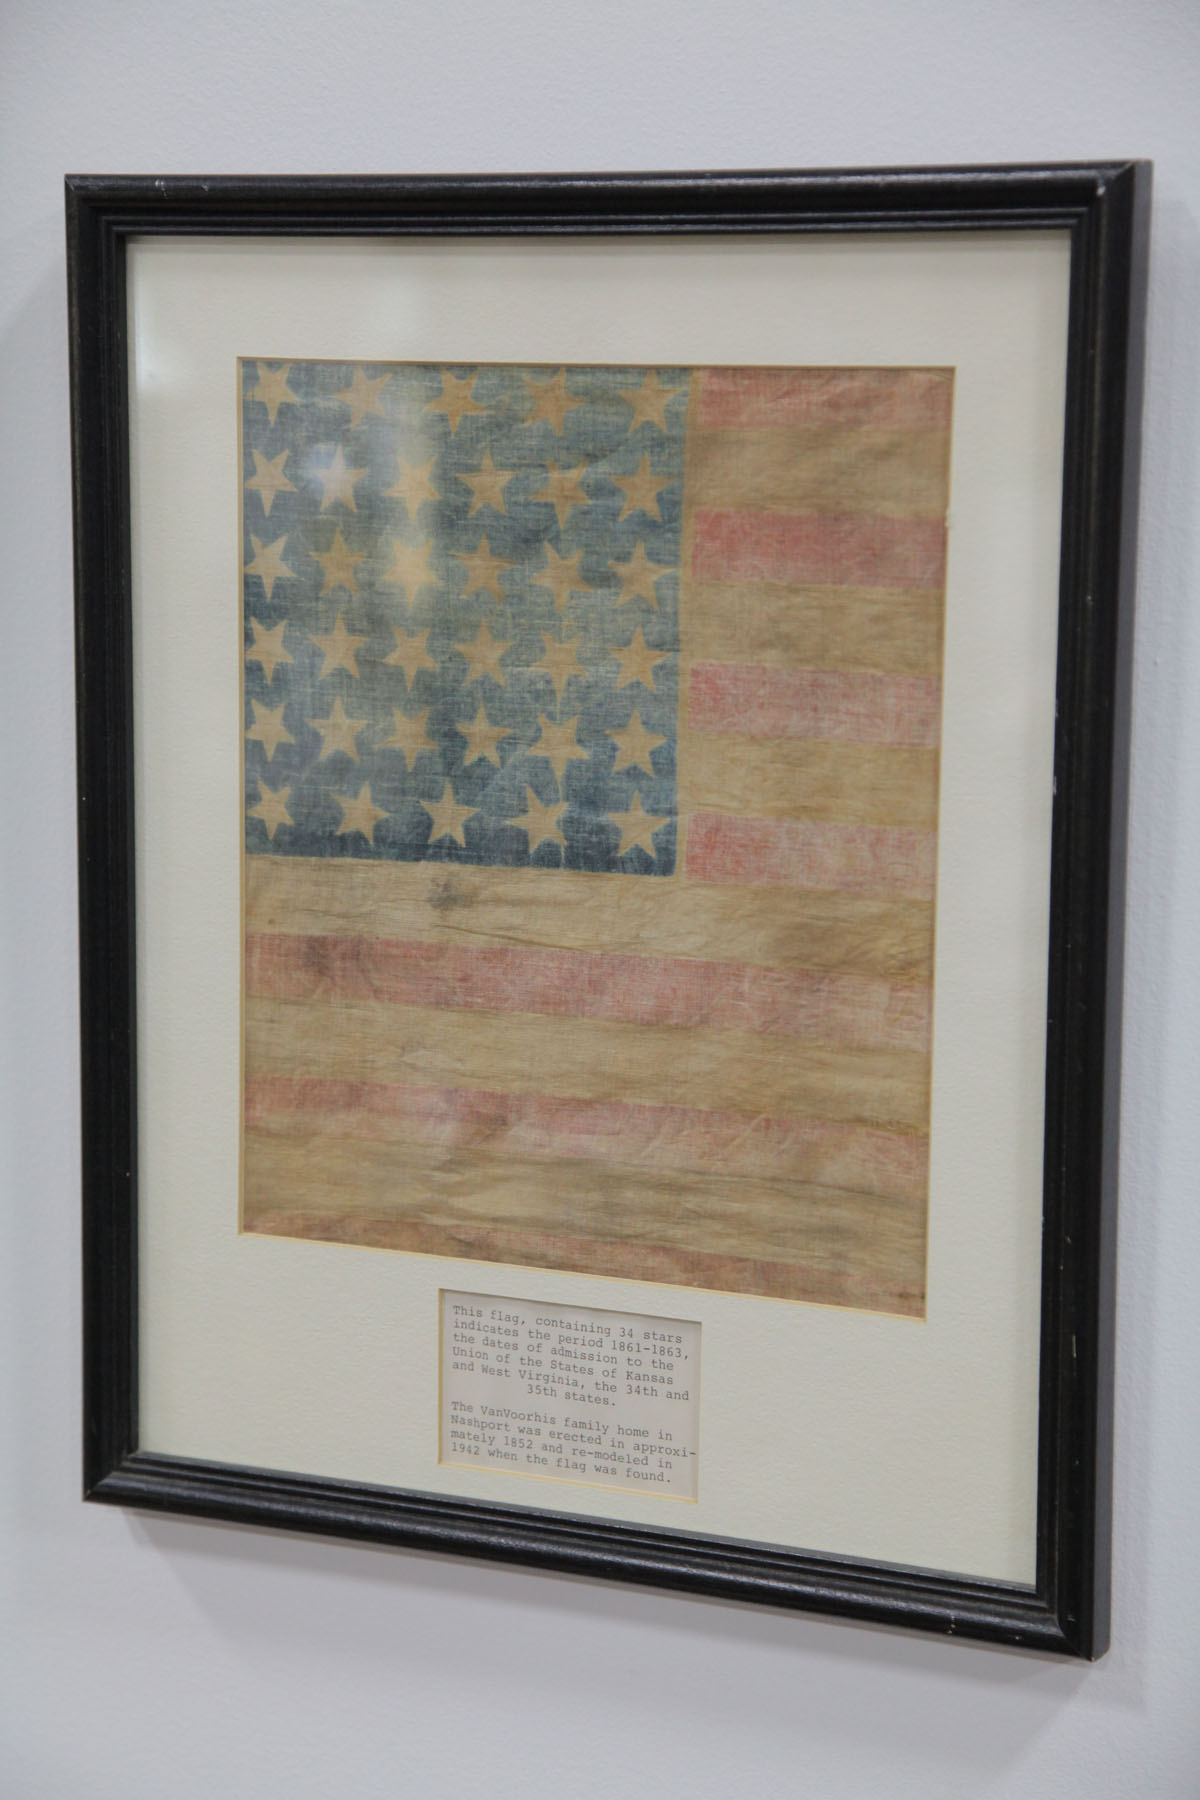 FRAMED 34 STAR AMERICAN FLAG.  American